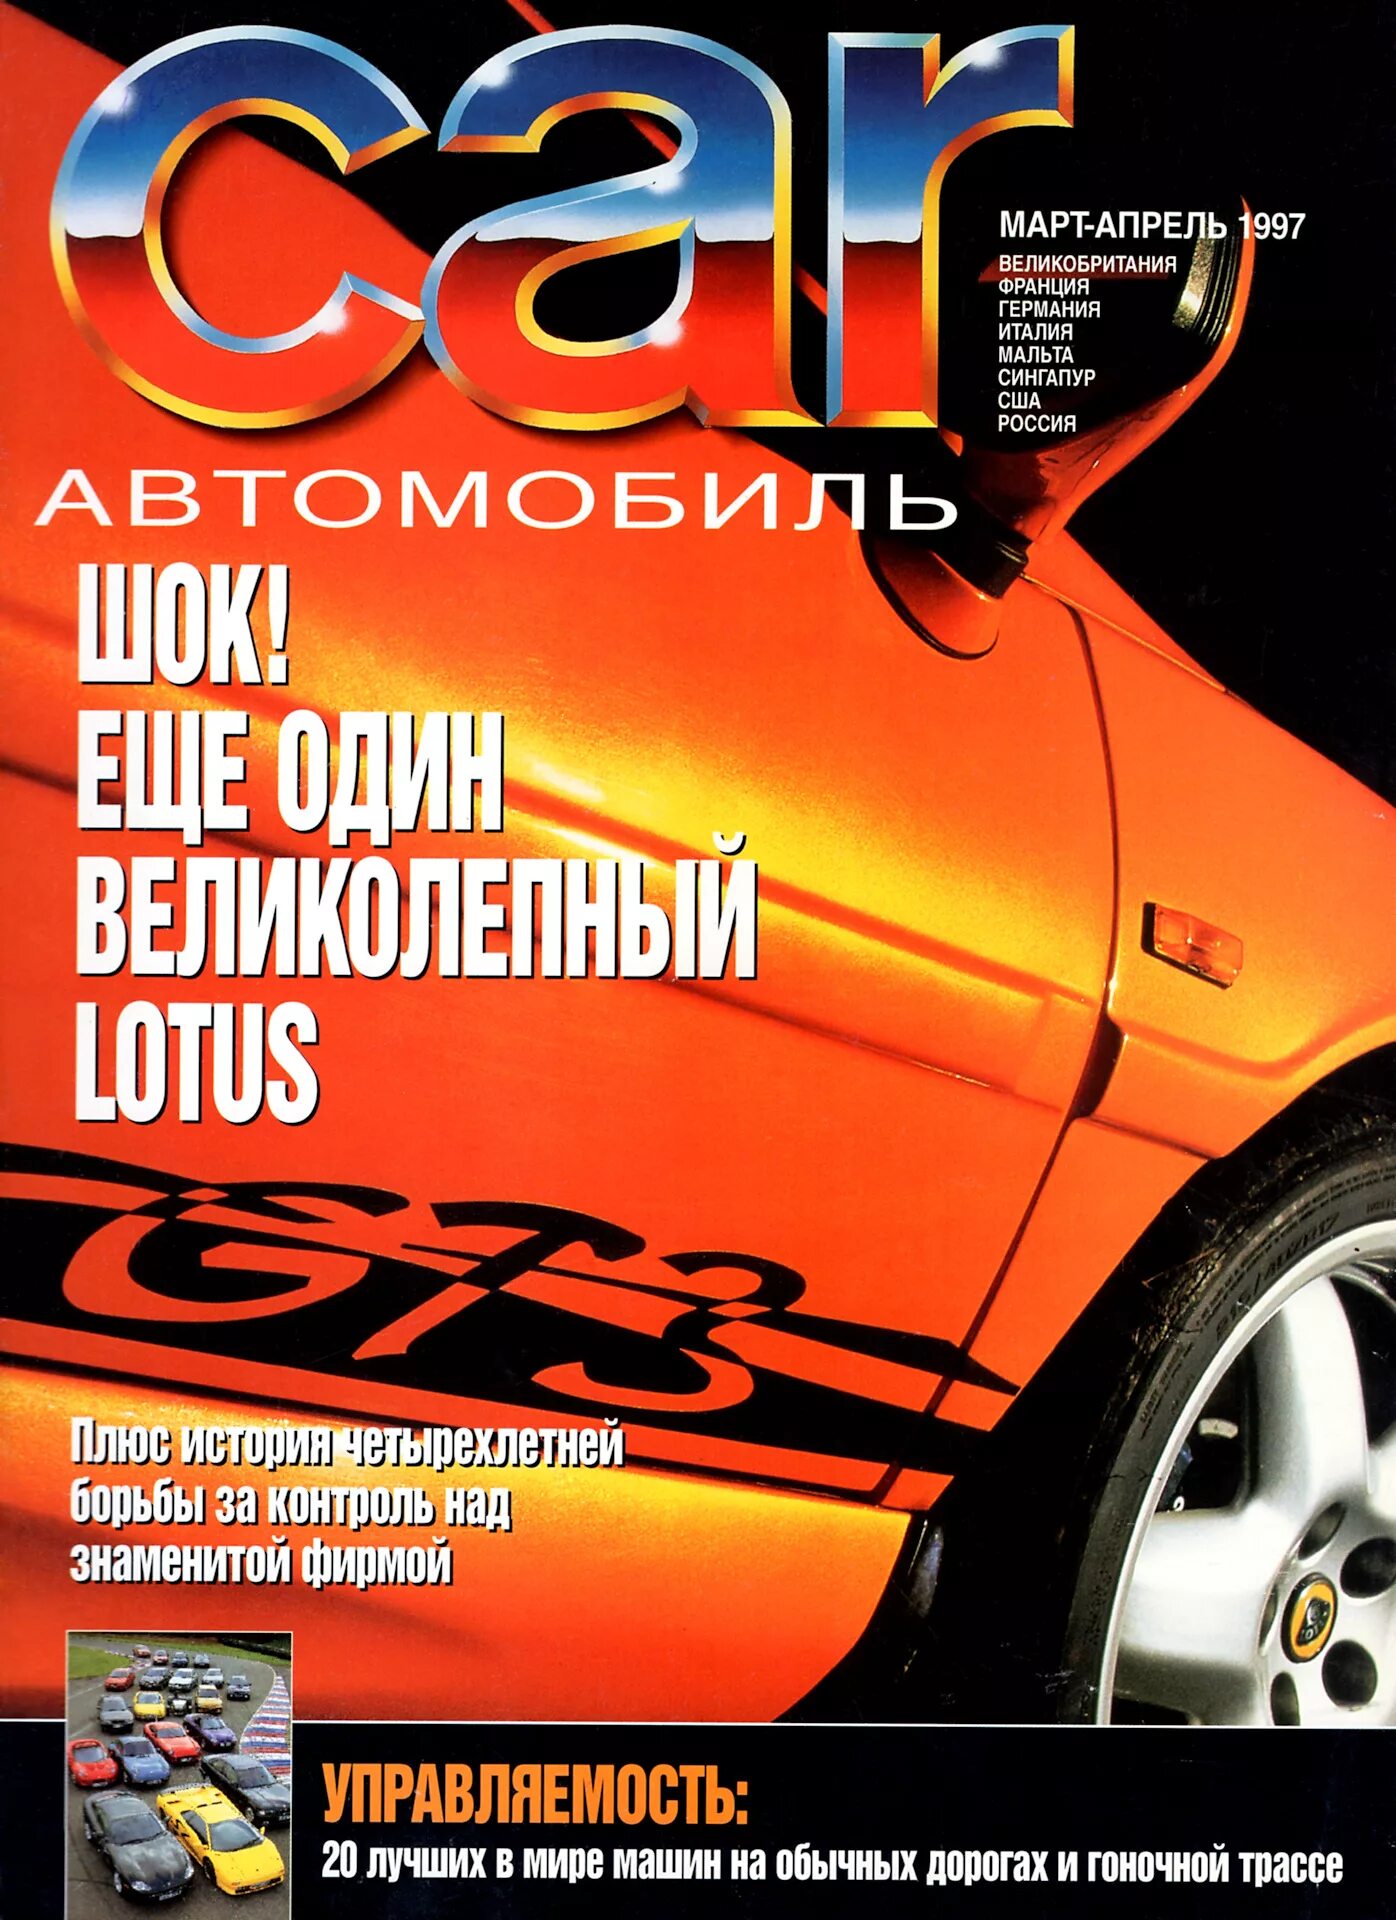 Car magazine. Автомобили 1997 журнал. Car Magazine, март 1997. Обложки журнала car Music.